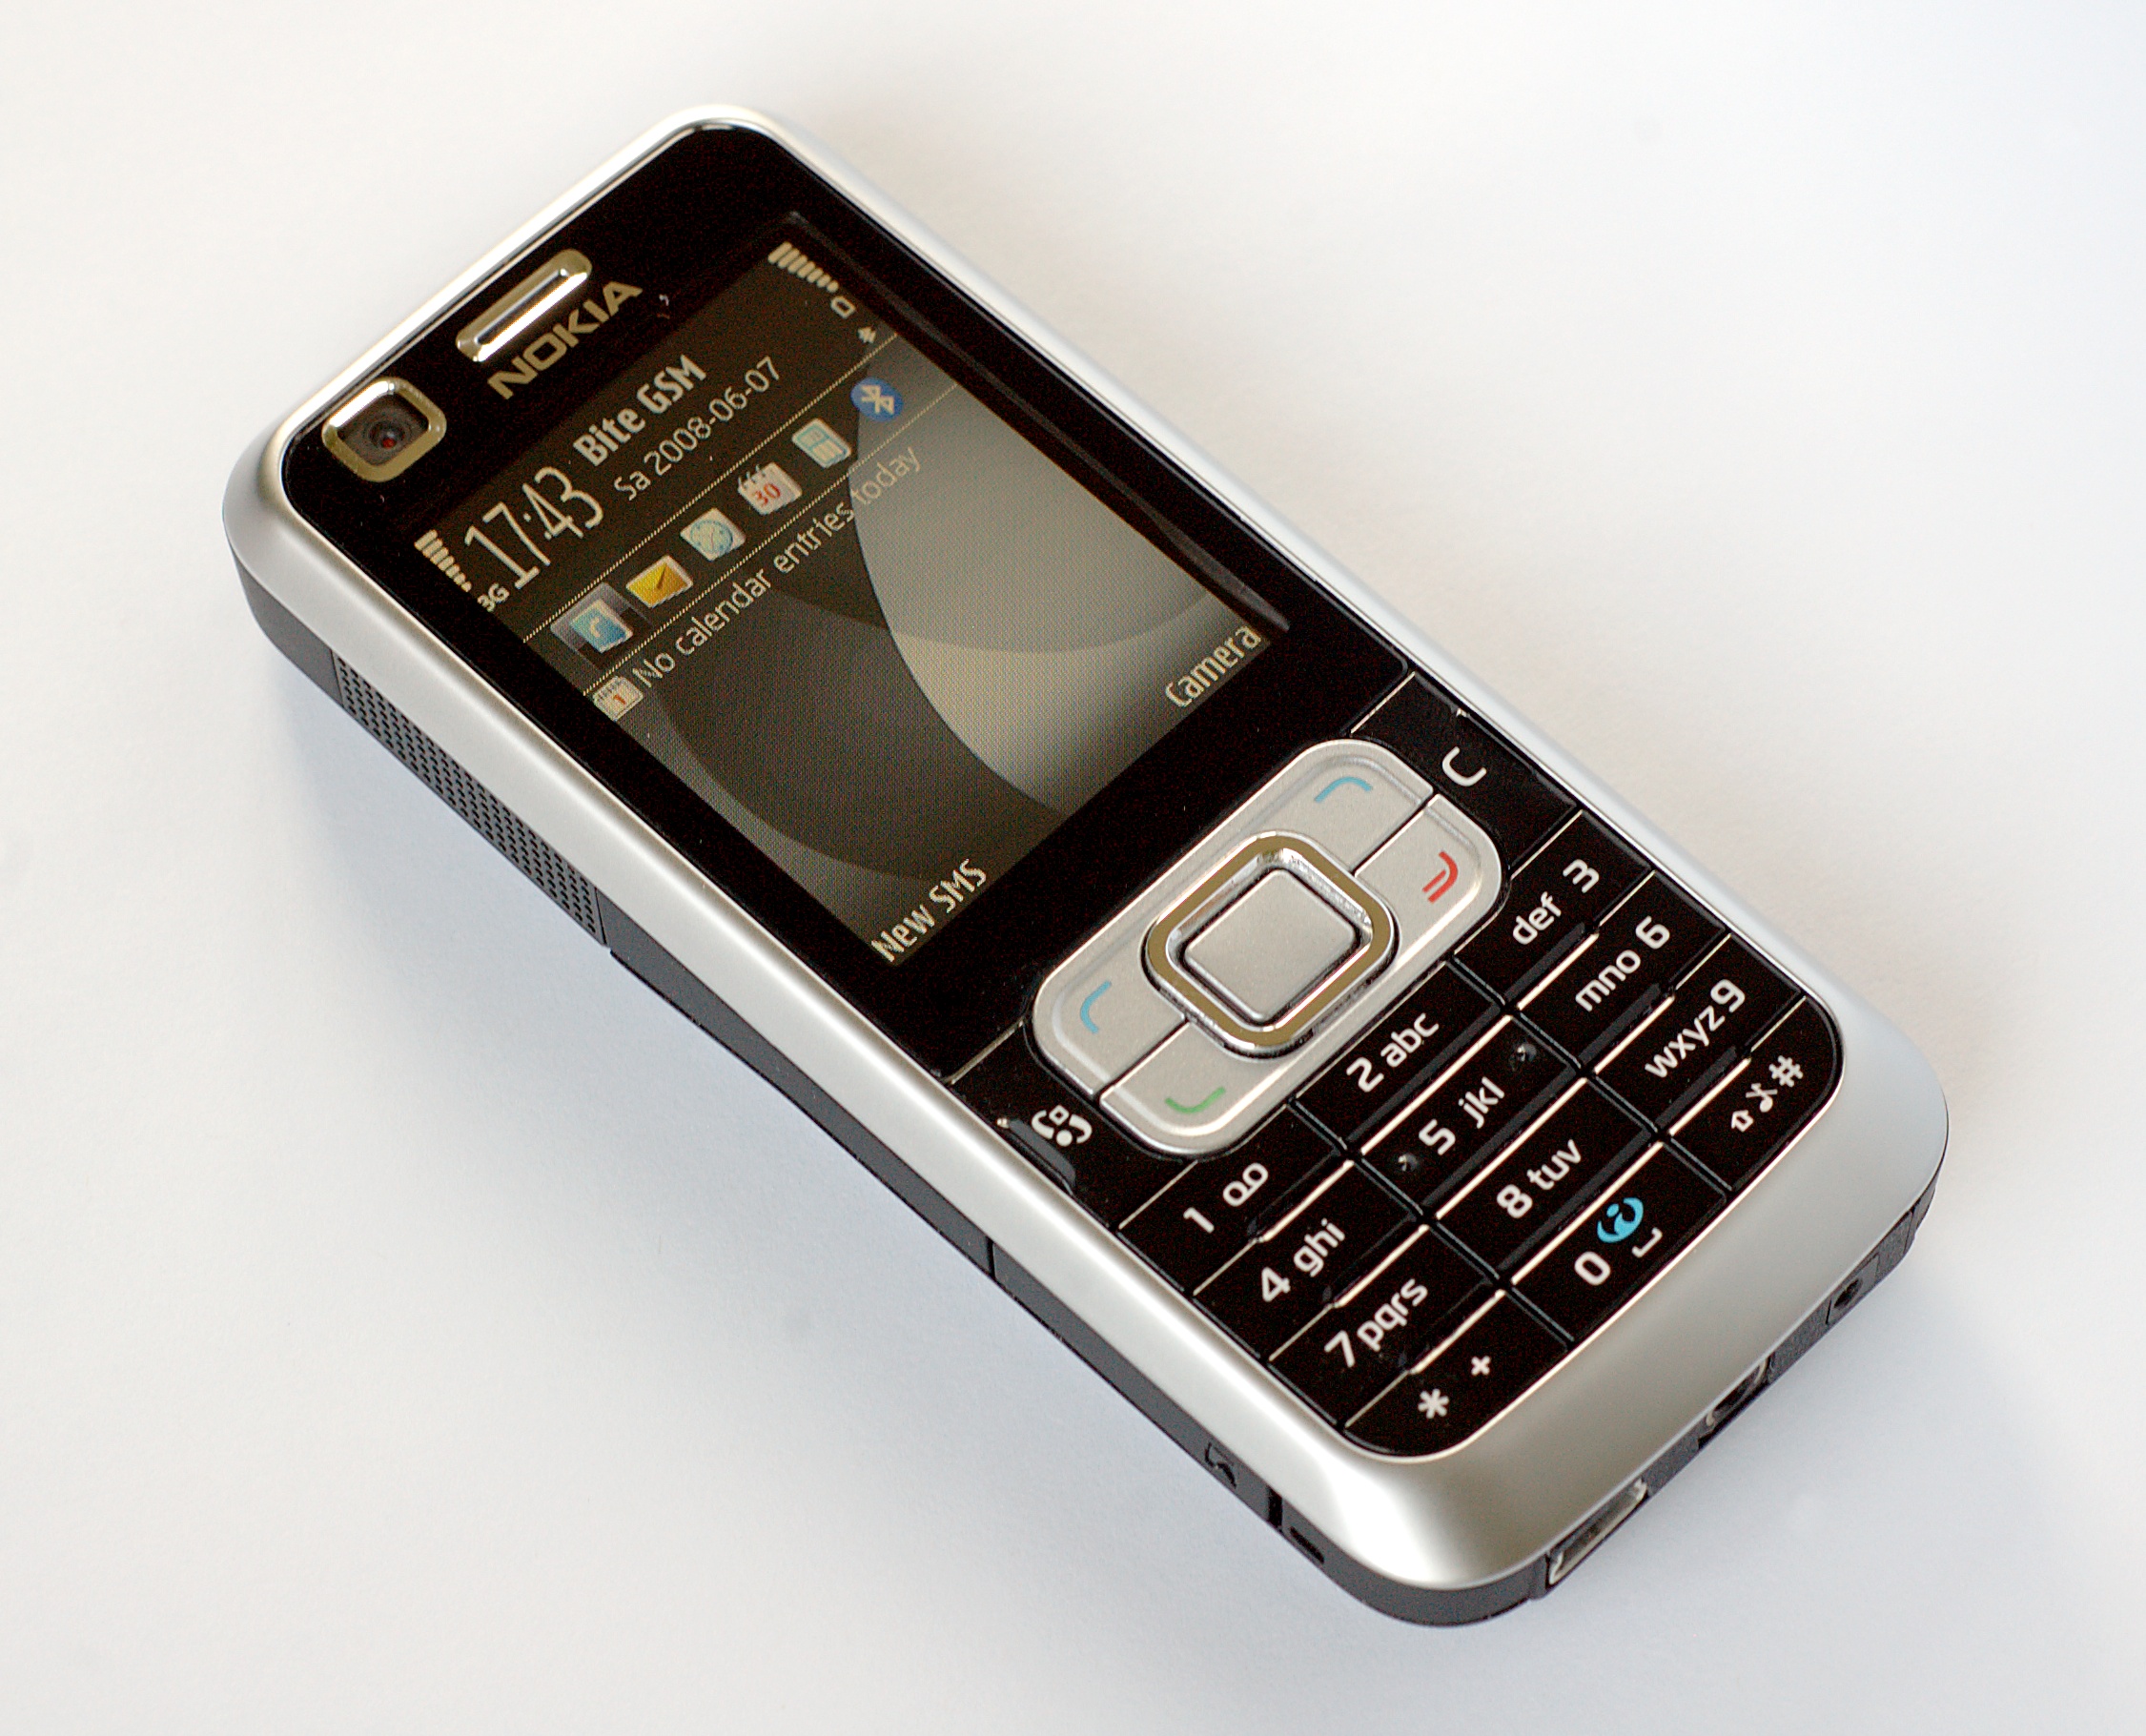 Download Whatsapp For Nokia E50